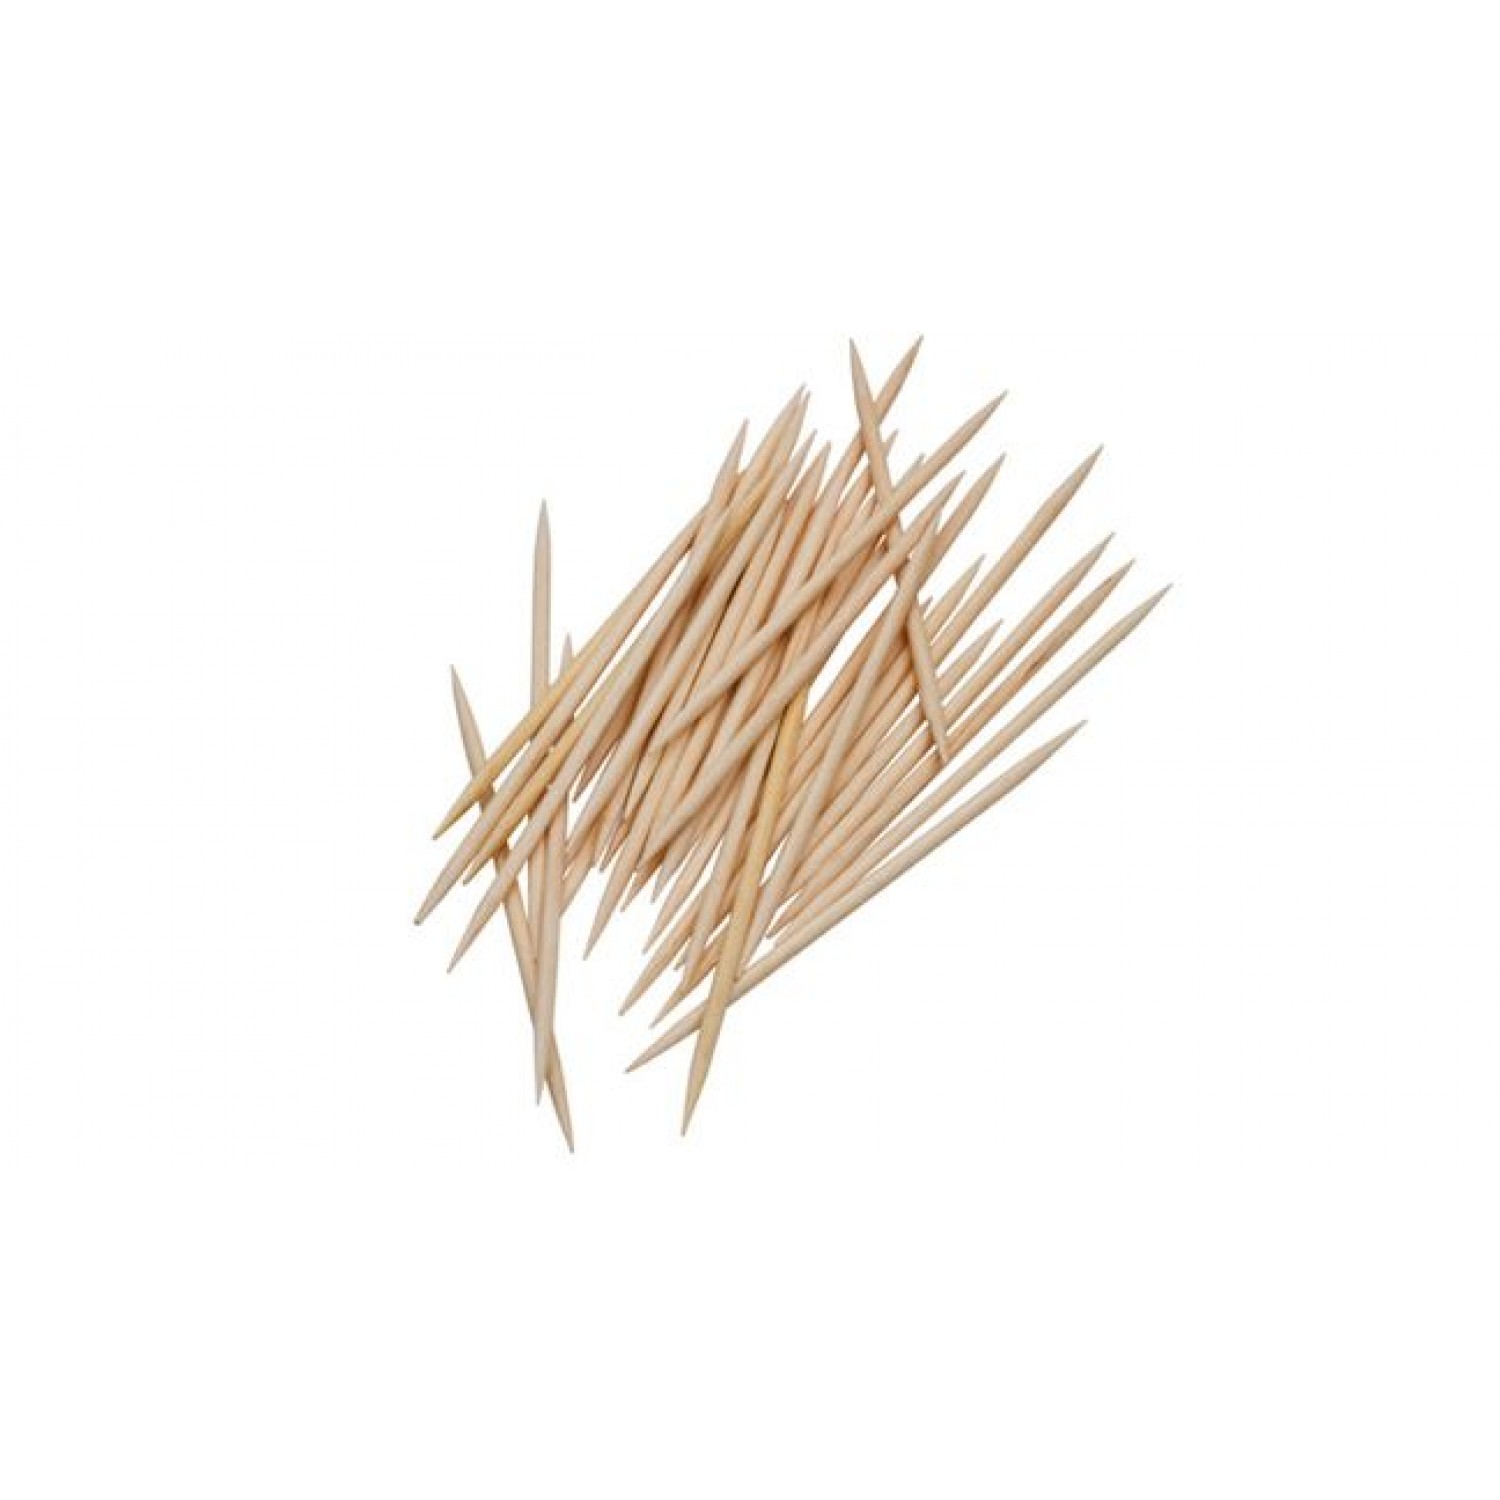 100 Toothpicks made of certified beech wood | Biodora